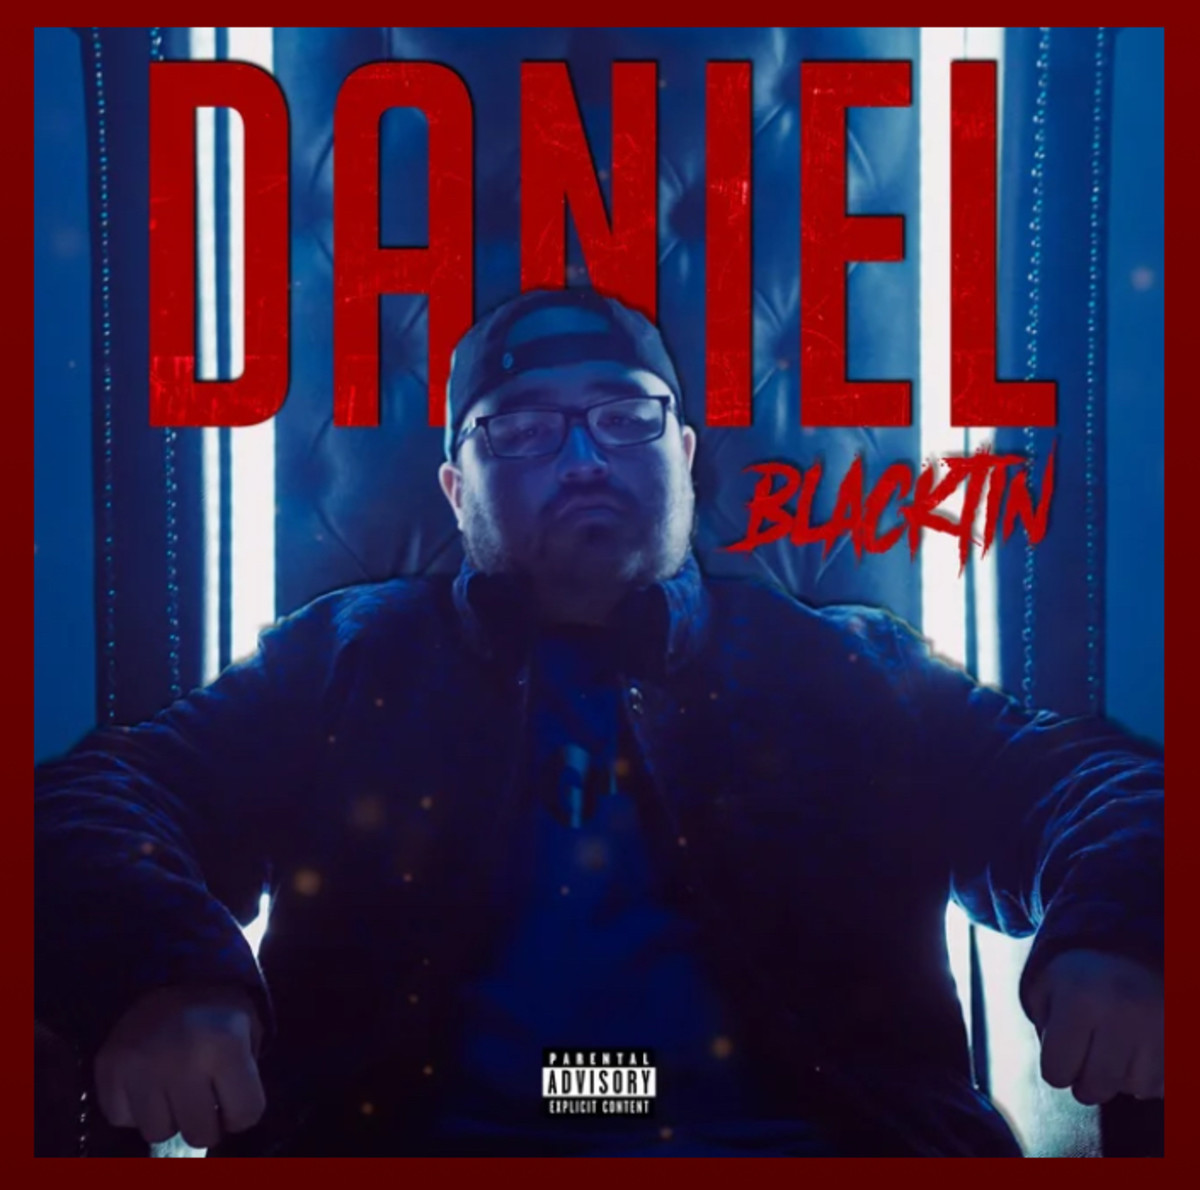 Daniel Blacktin Impresses with “Daniel Blacktin:” Album Review